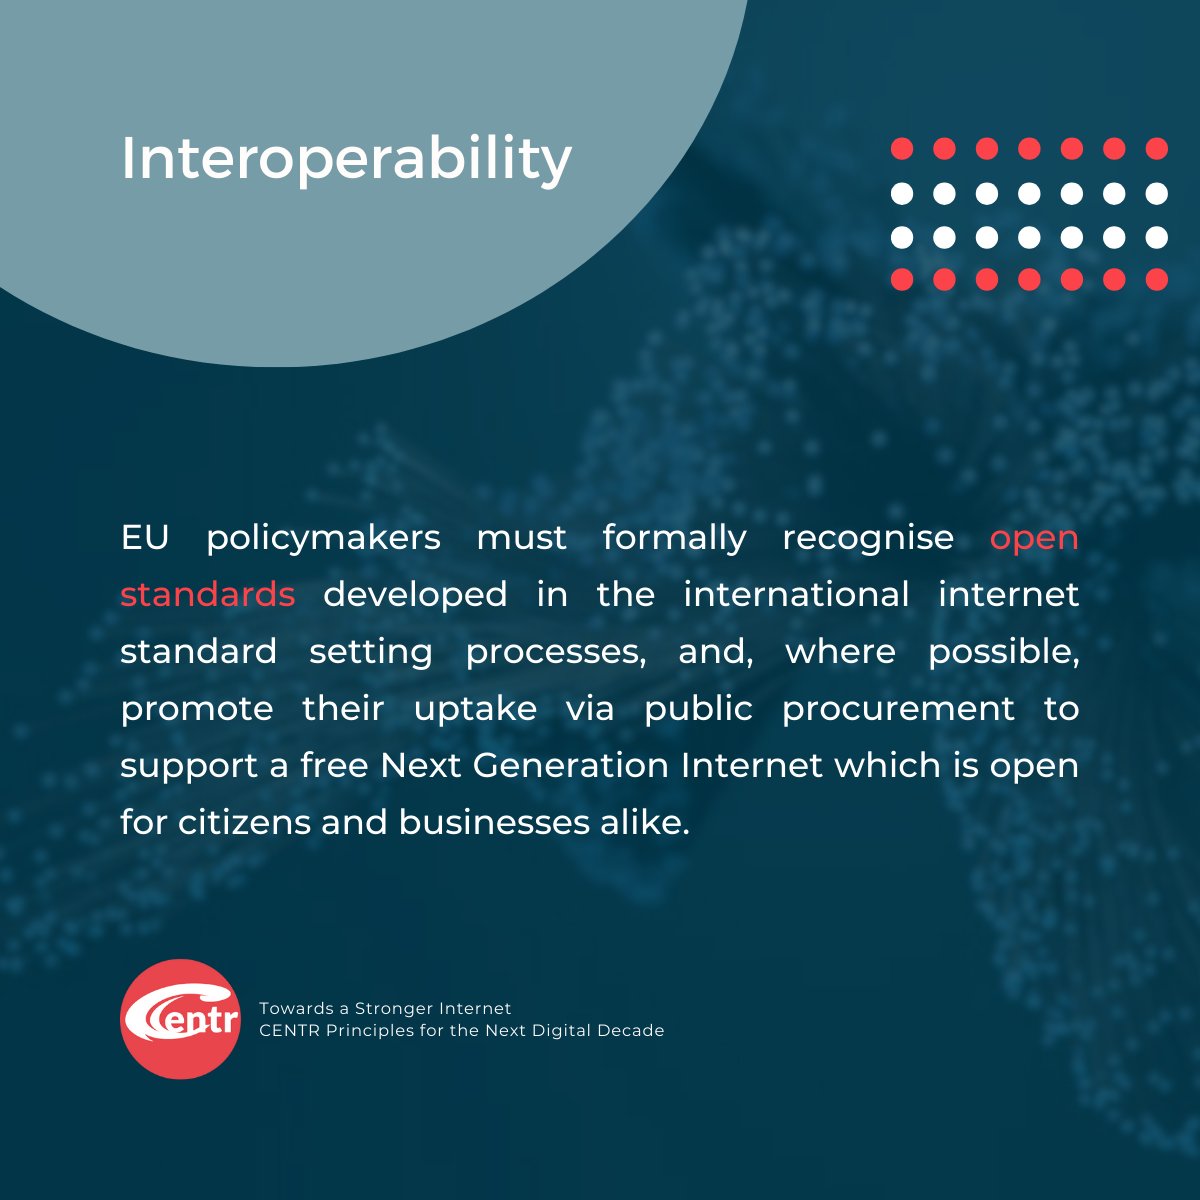 #TowardsAStrongerInternet: #CENTRPrinciples for the Next #DigitalDecade.

1️⃣ 𝙄𝙣𝙩𝙚𝙧𝙤𝙥𝙚𝙧𝙖𝙗𝙞𝙡𝙞𝙩𝙮 𝙖𝙣𝙙 𝙛𝙤𝙧𝙢𝙖𝙡 𝙧𝙚𝙘𝙤𝙜𝙣𝙞𝙩𝙞𝙤𝙣 𝙤𝙛 𝙤𝙥𝙚𝙣 𝙨𝙩𝙖𝙣𝙙𝙖𝙧𝙙𝙨 𝙞𝙨 𝙖 𝙢𝙪𝙨𝙩 𝙞𝙣 𝙥𝙪𝙗𝙡𝙞𝙘 𝙥𝙧𝙤𝙘𝙪𝙧𝙚𝙢𝙚𝙣𝙩.